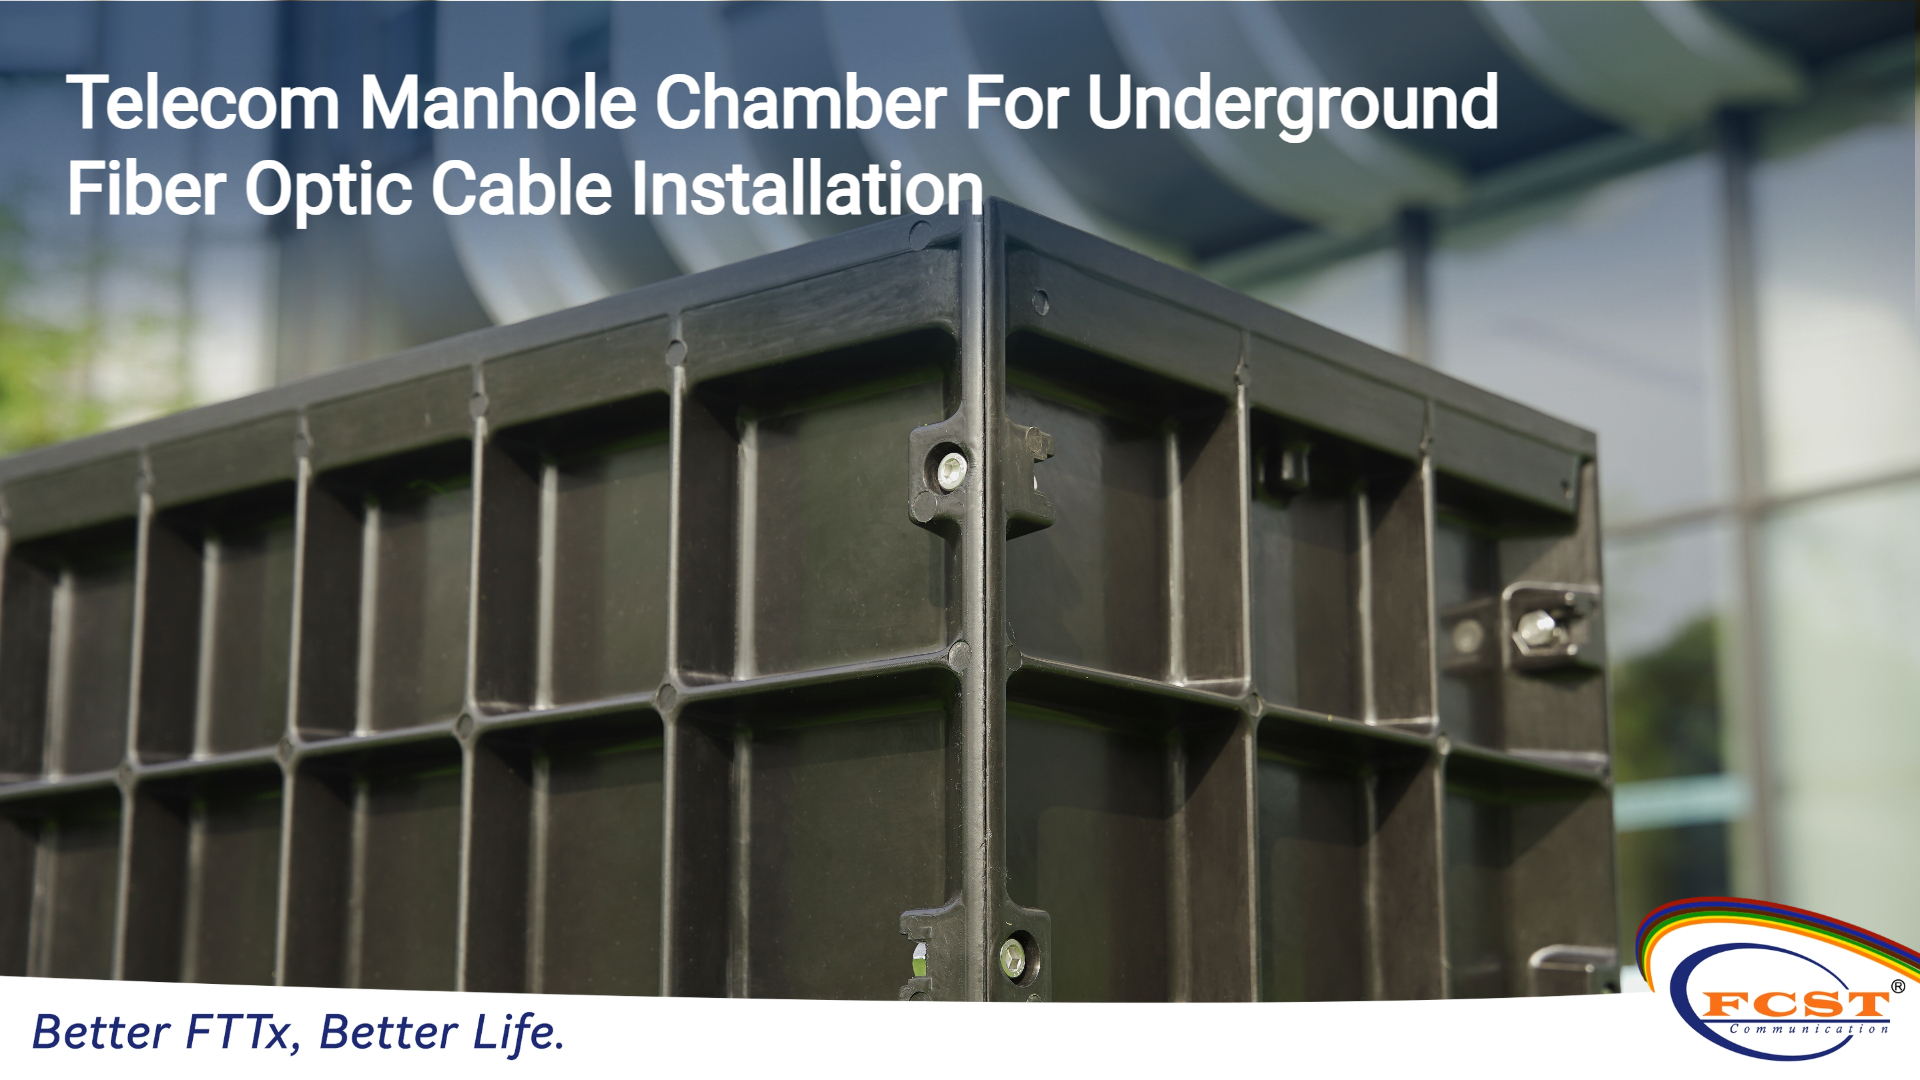 Telecom Manhole Chamber For Underground Fiber Optic Cable Installation